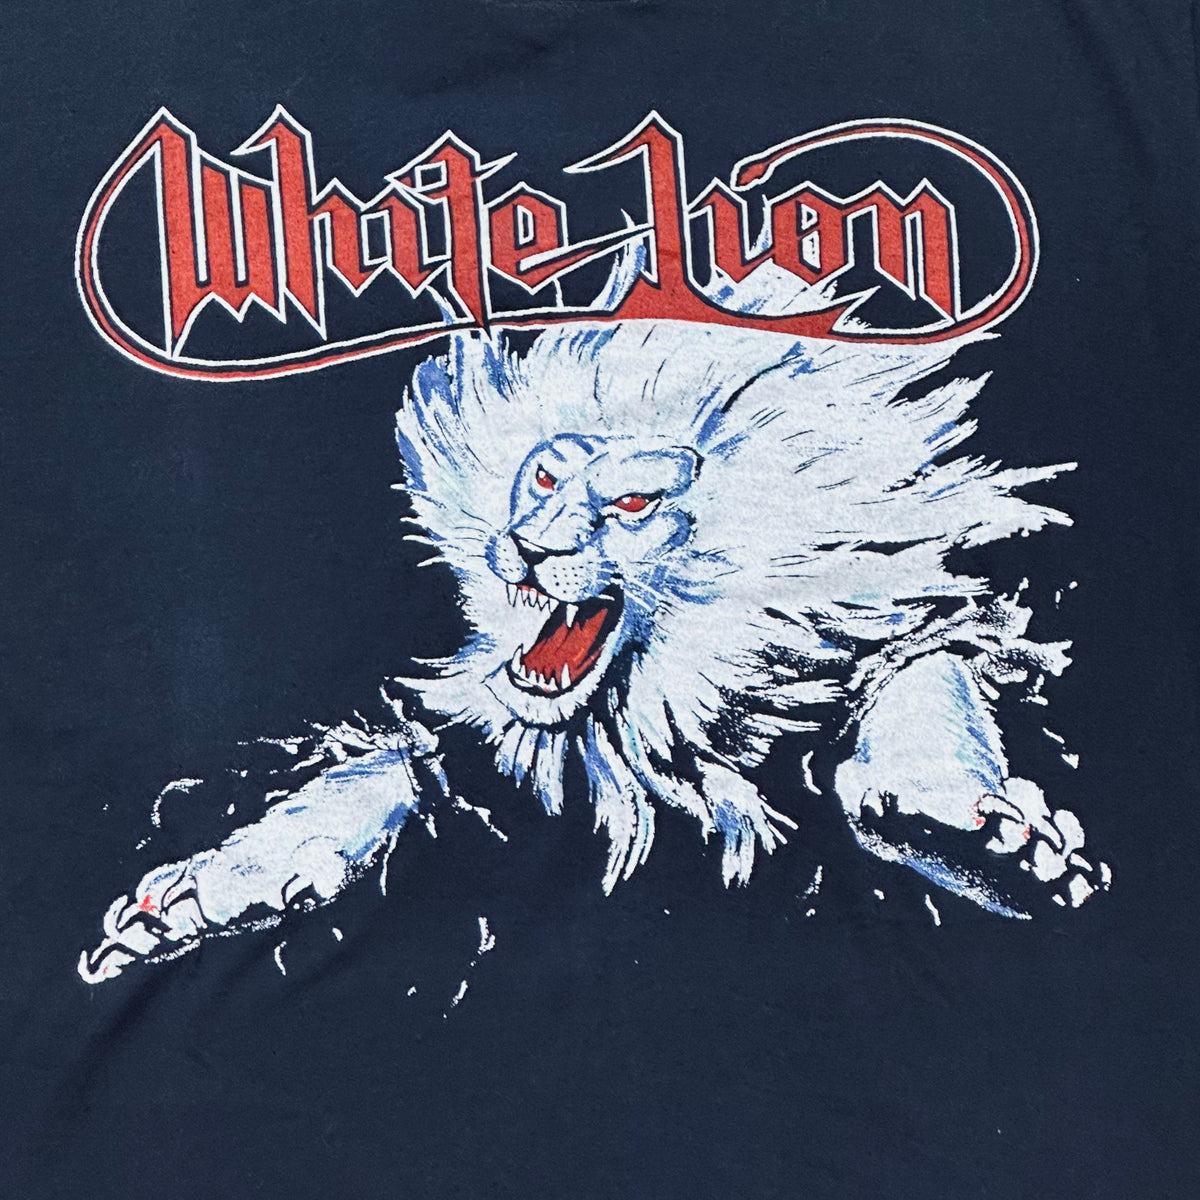 1989 Vintage White Lion Heavy Metal Big Game Tour shirt